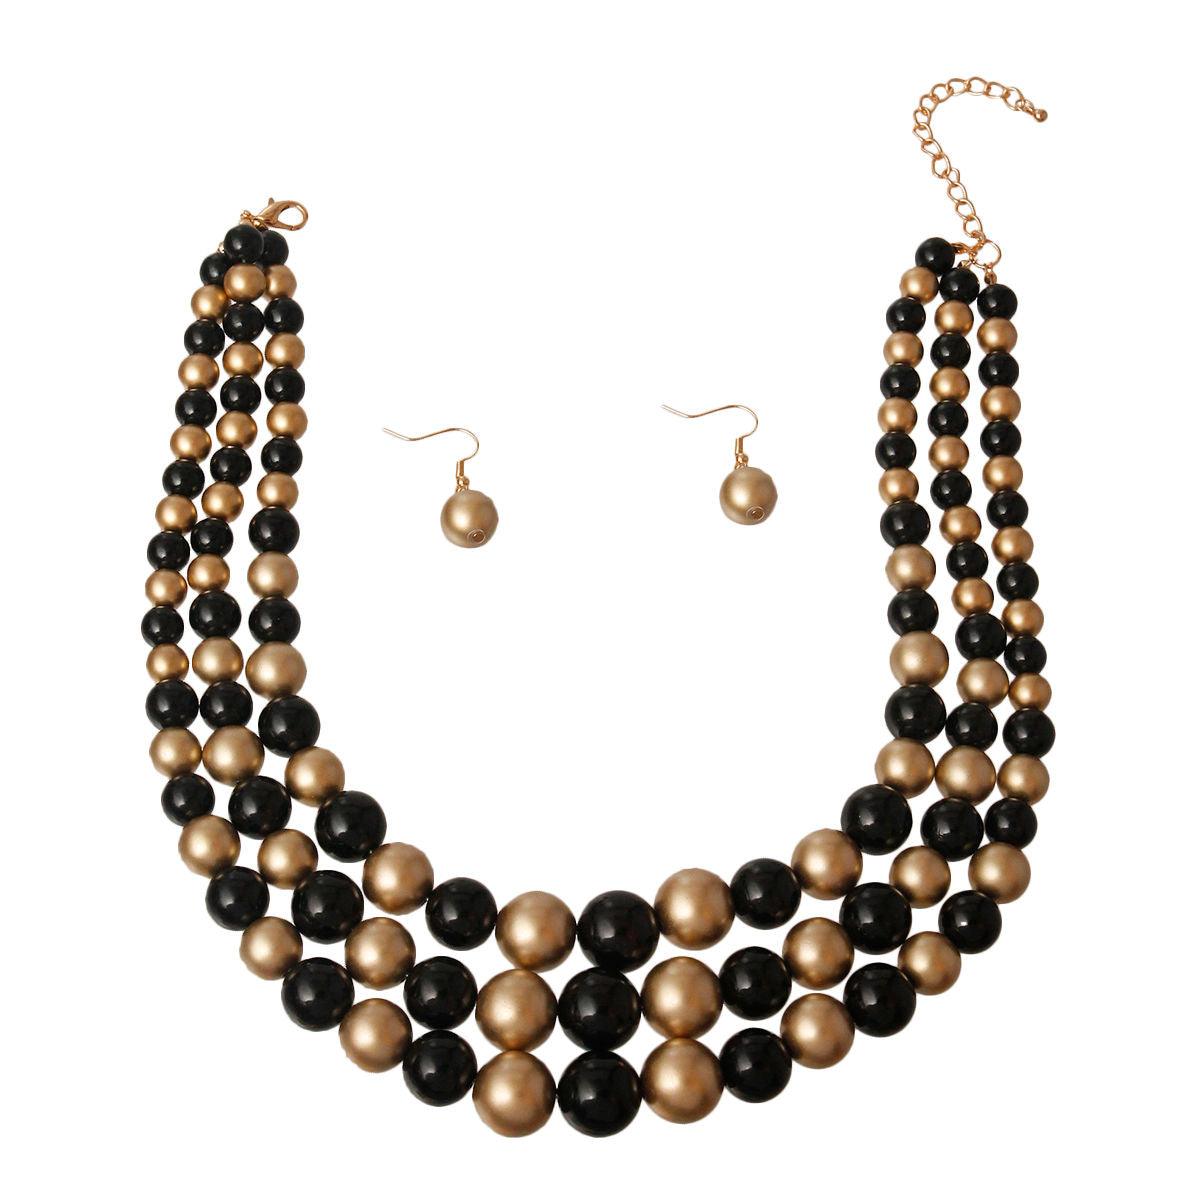 Three Strand Black/Gold Imitation Pearl Necklace Set